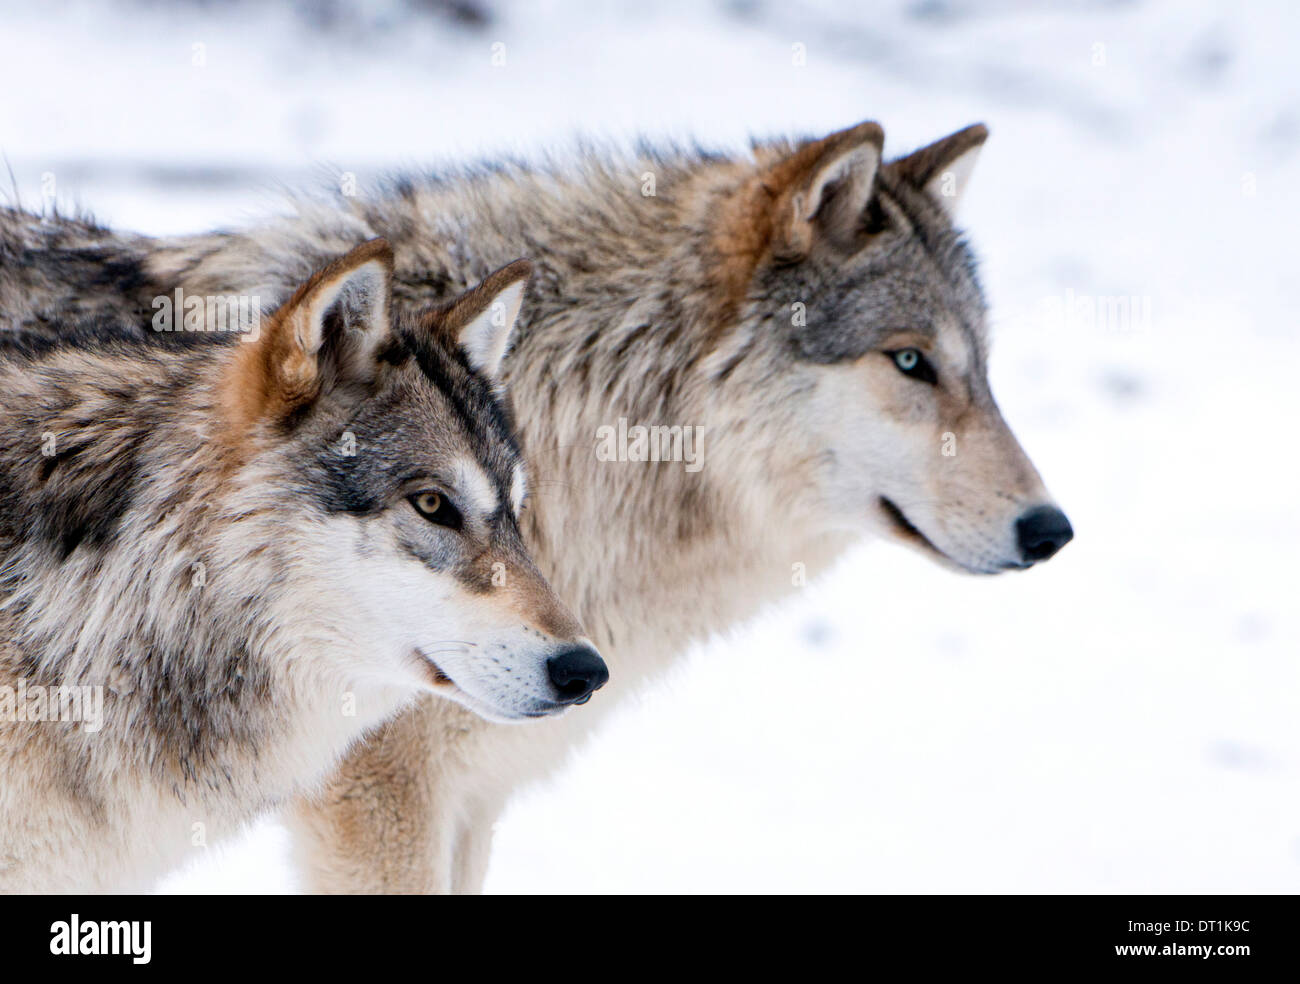 Due sub adulto North American Timber lupo (Canis lupus) nella neve, Austria, Europa Foto Stock